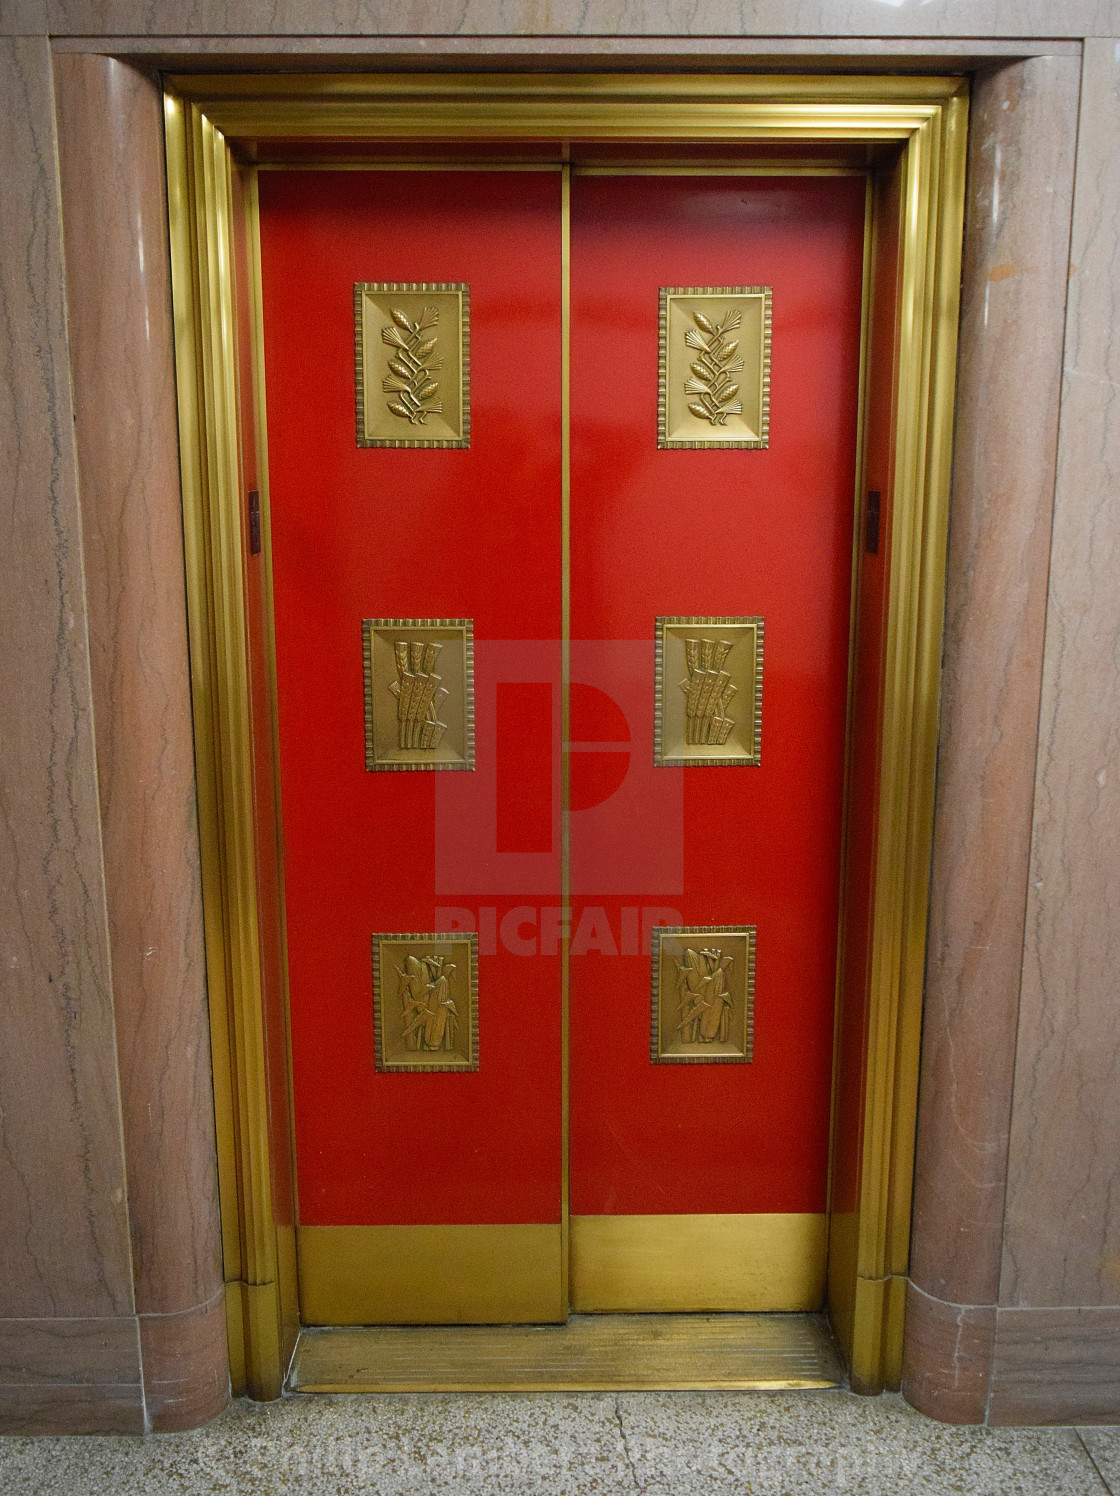 "Art Deco Elevator" stock image